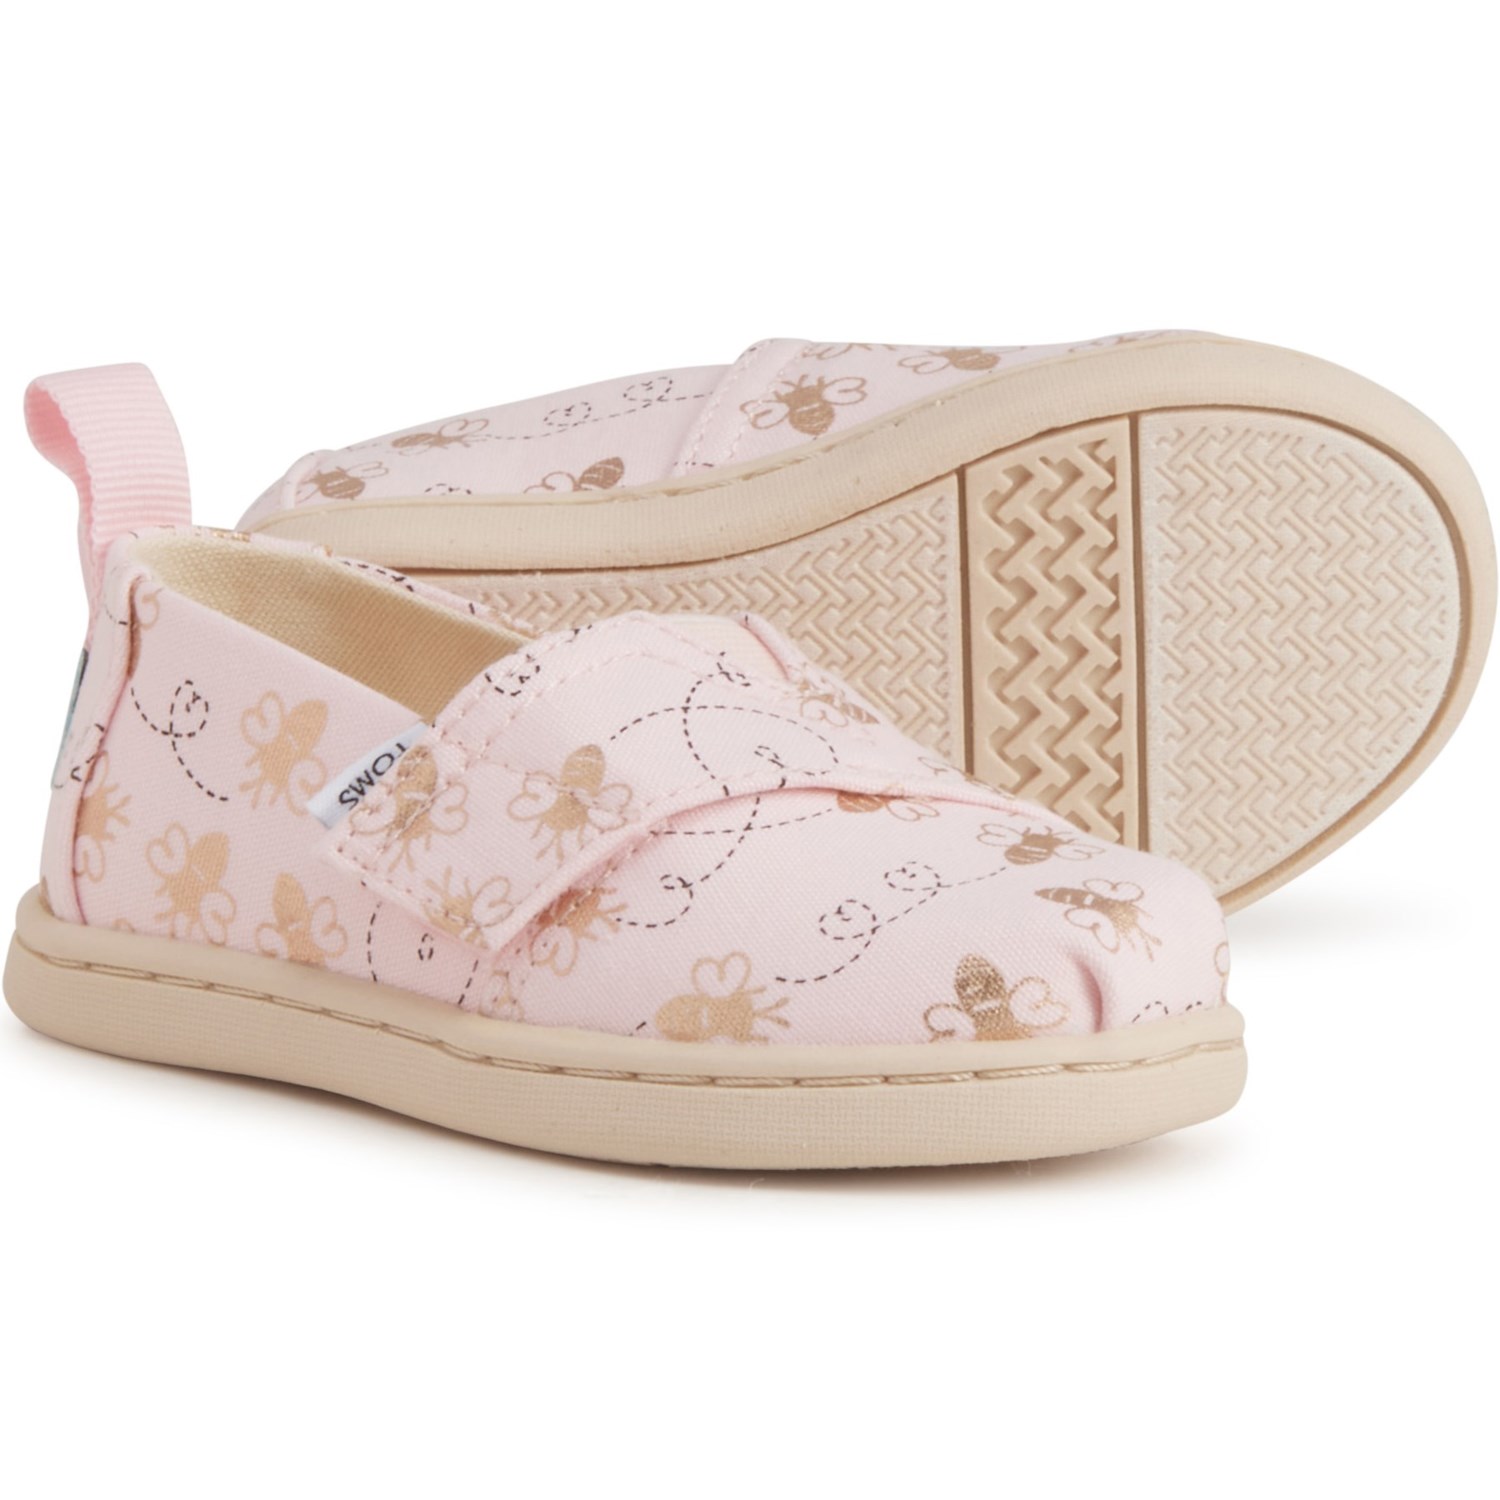 TOMS Infant and Toddler Girls Bee Mine Foil Alpargata Shoes